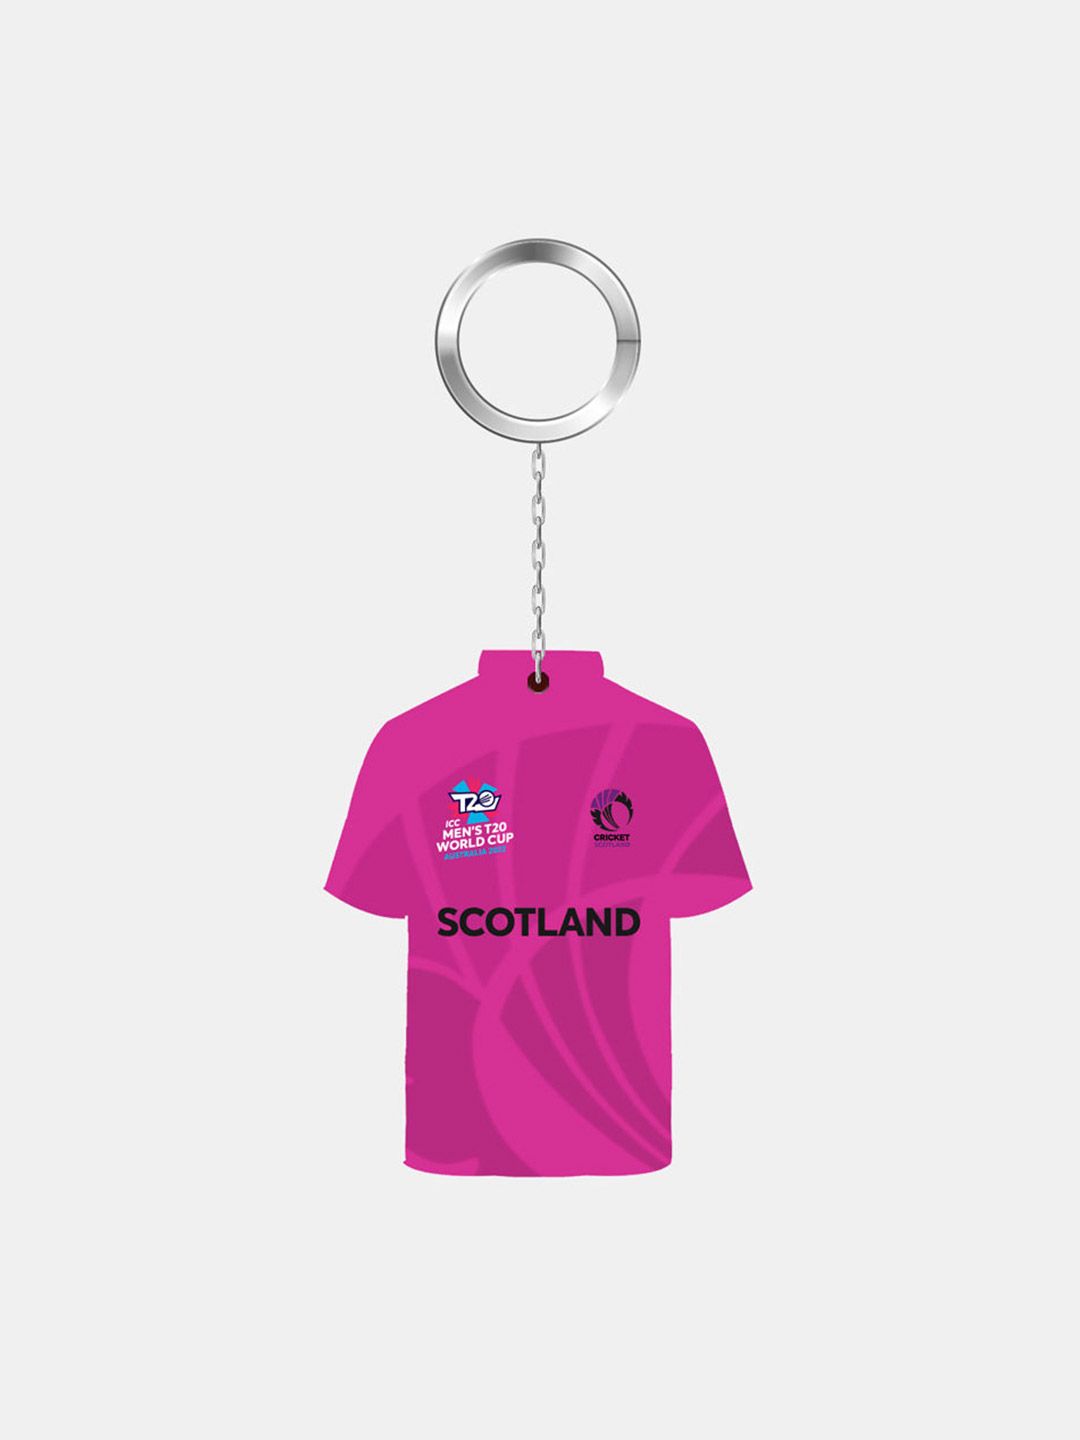 Scotland national cricket team by Jiga Designs on Dribbble